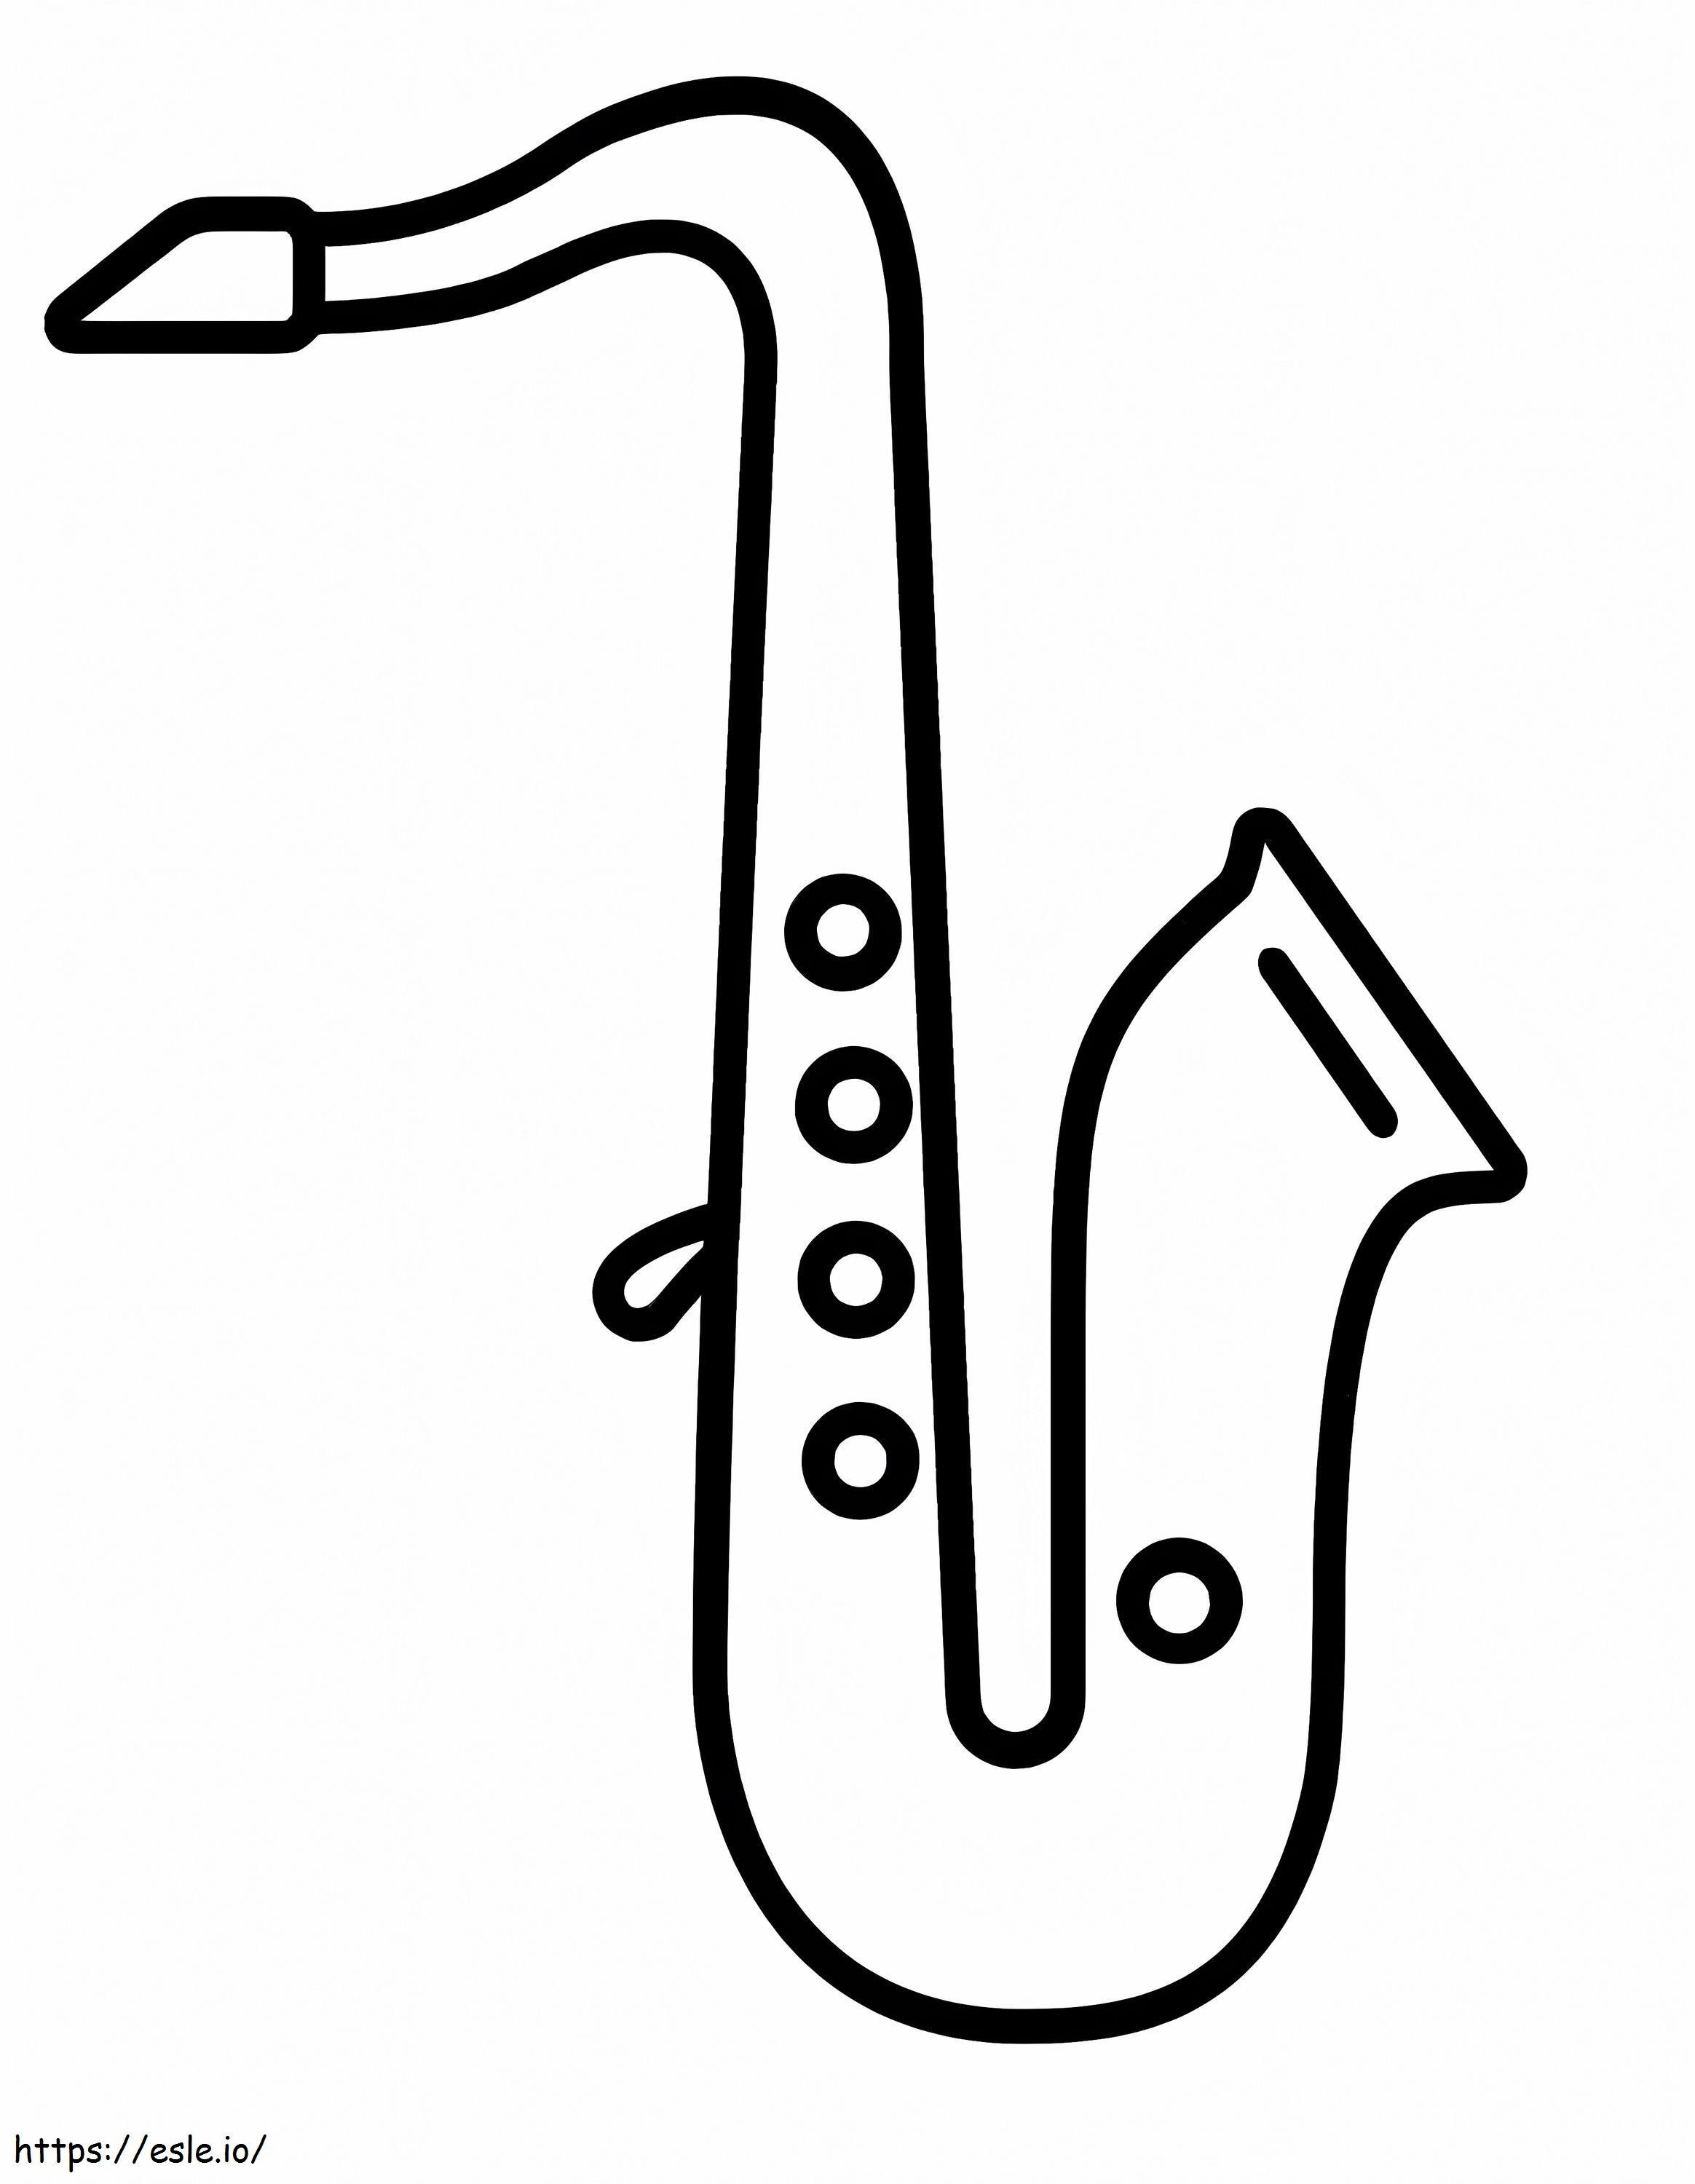 Coloriage Dessin animé simple de saxophone 2 à imprimer dessin